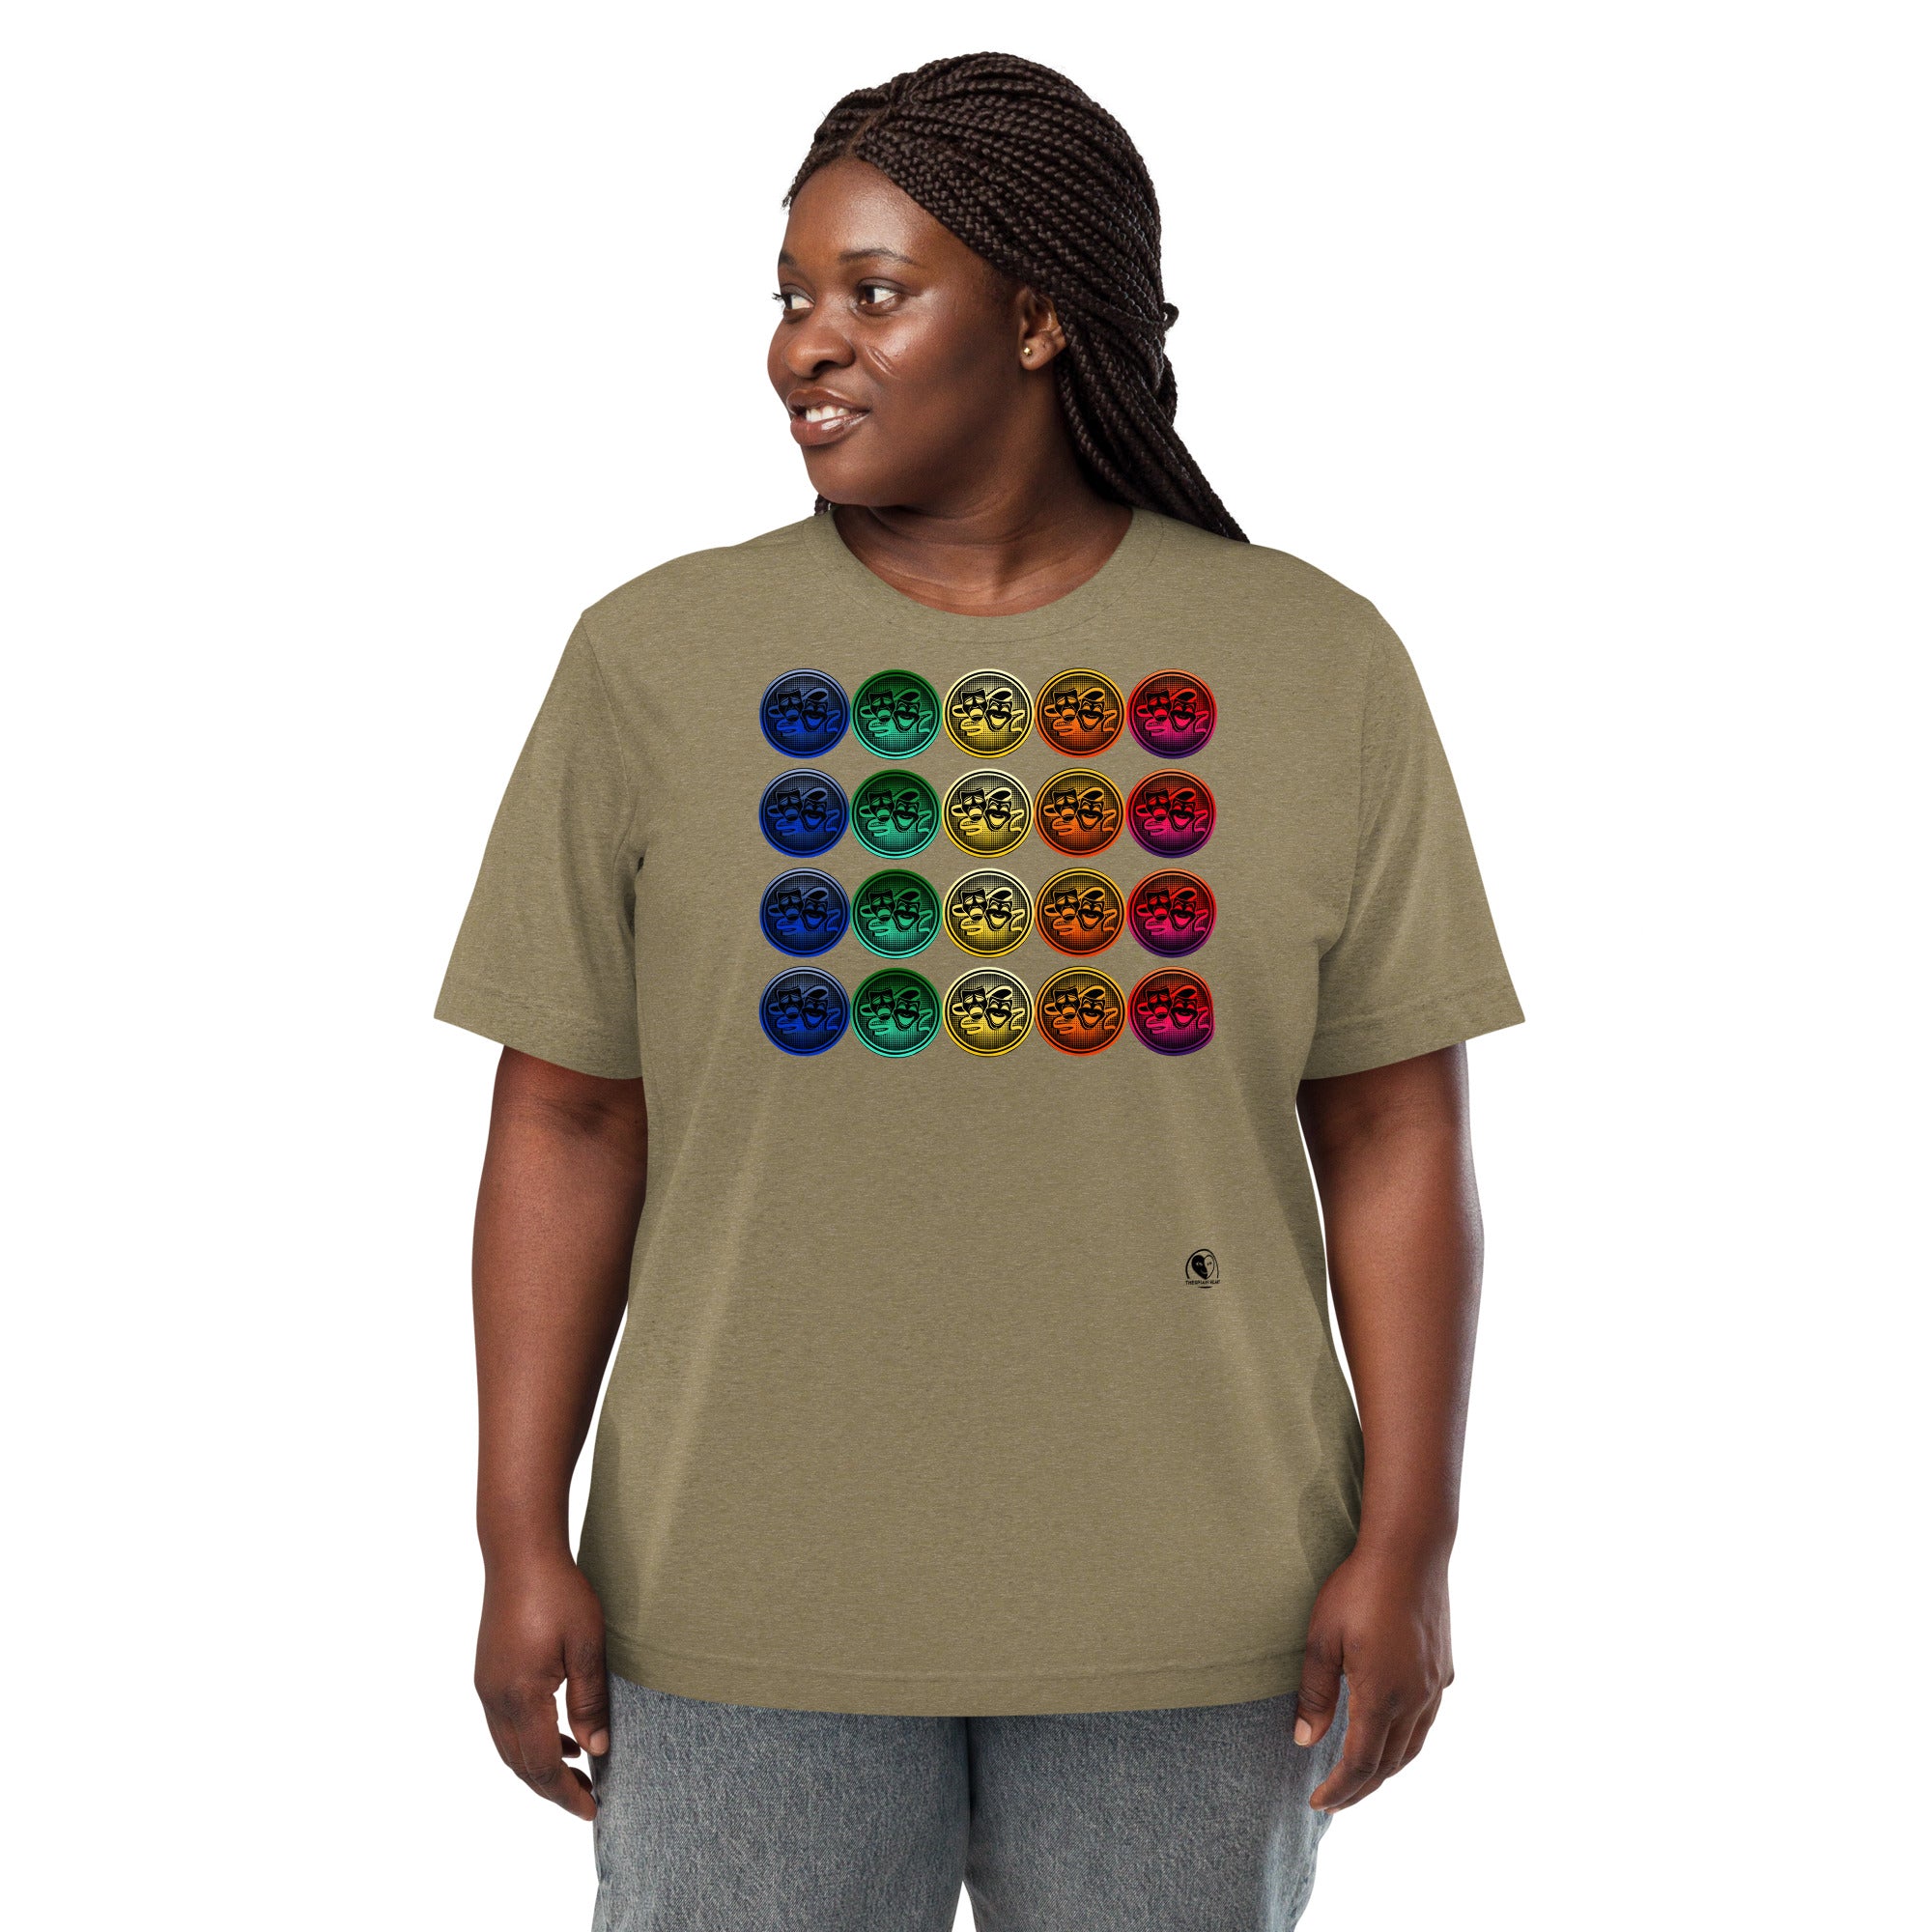 Drama Masks Colorful Circle - Premium Tri-blend Short-Sleeve Unisex T-shirt